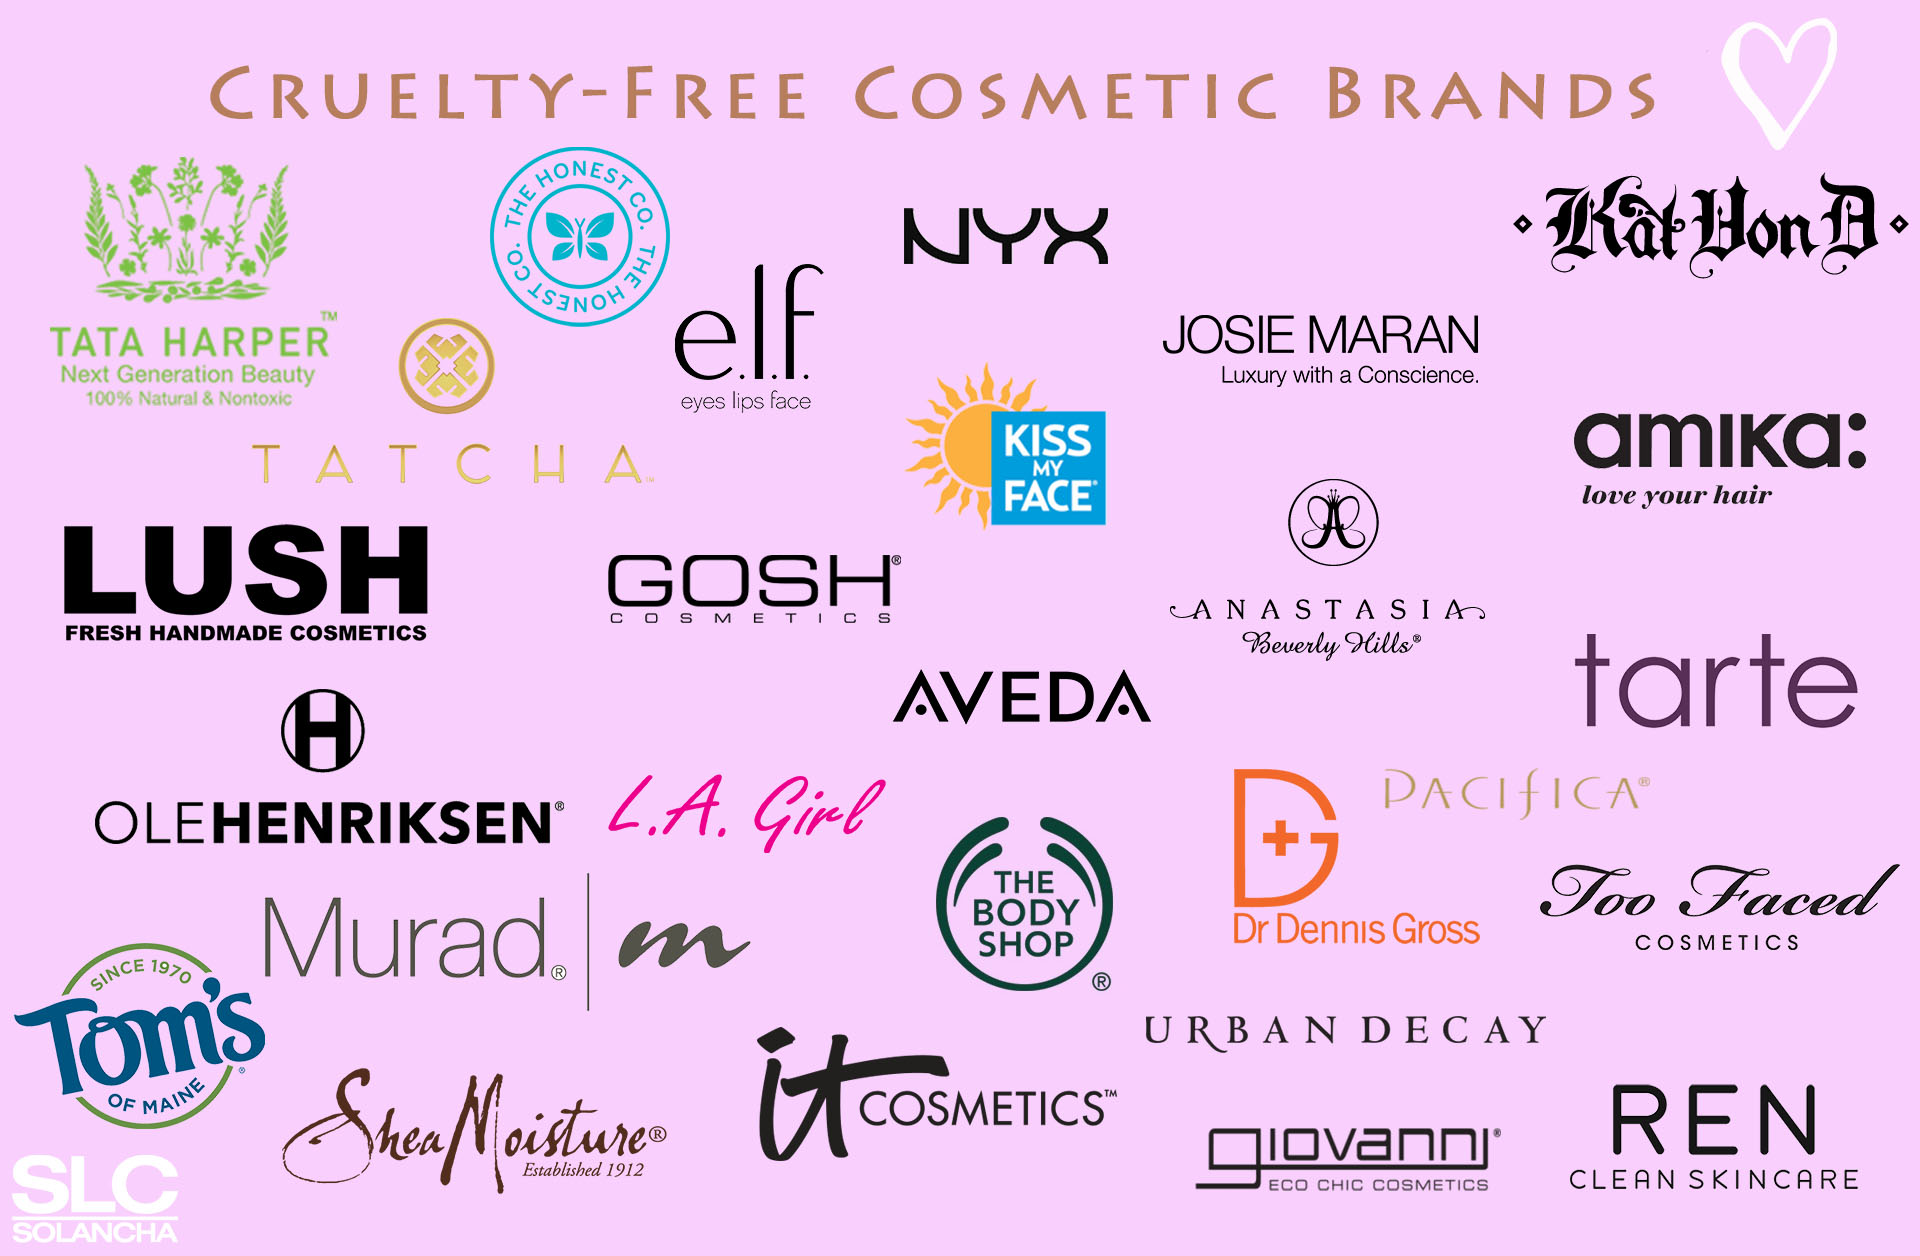 cruelty-free cosmetic brands list image